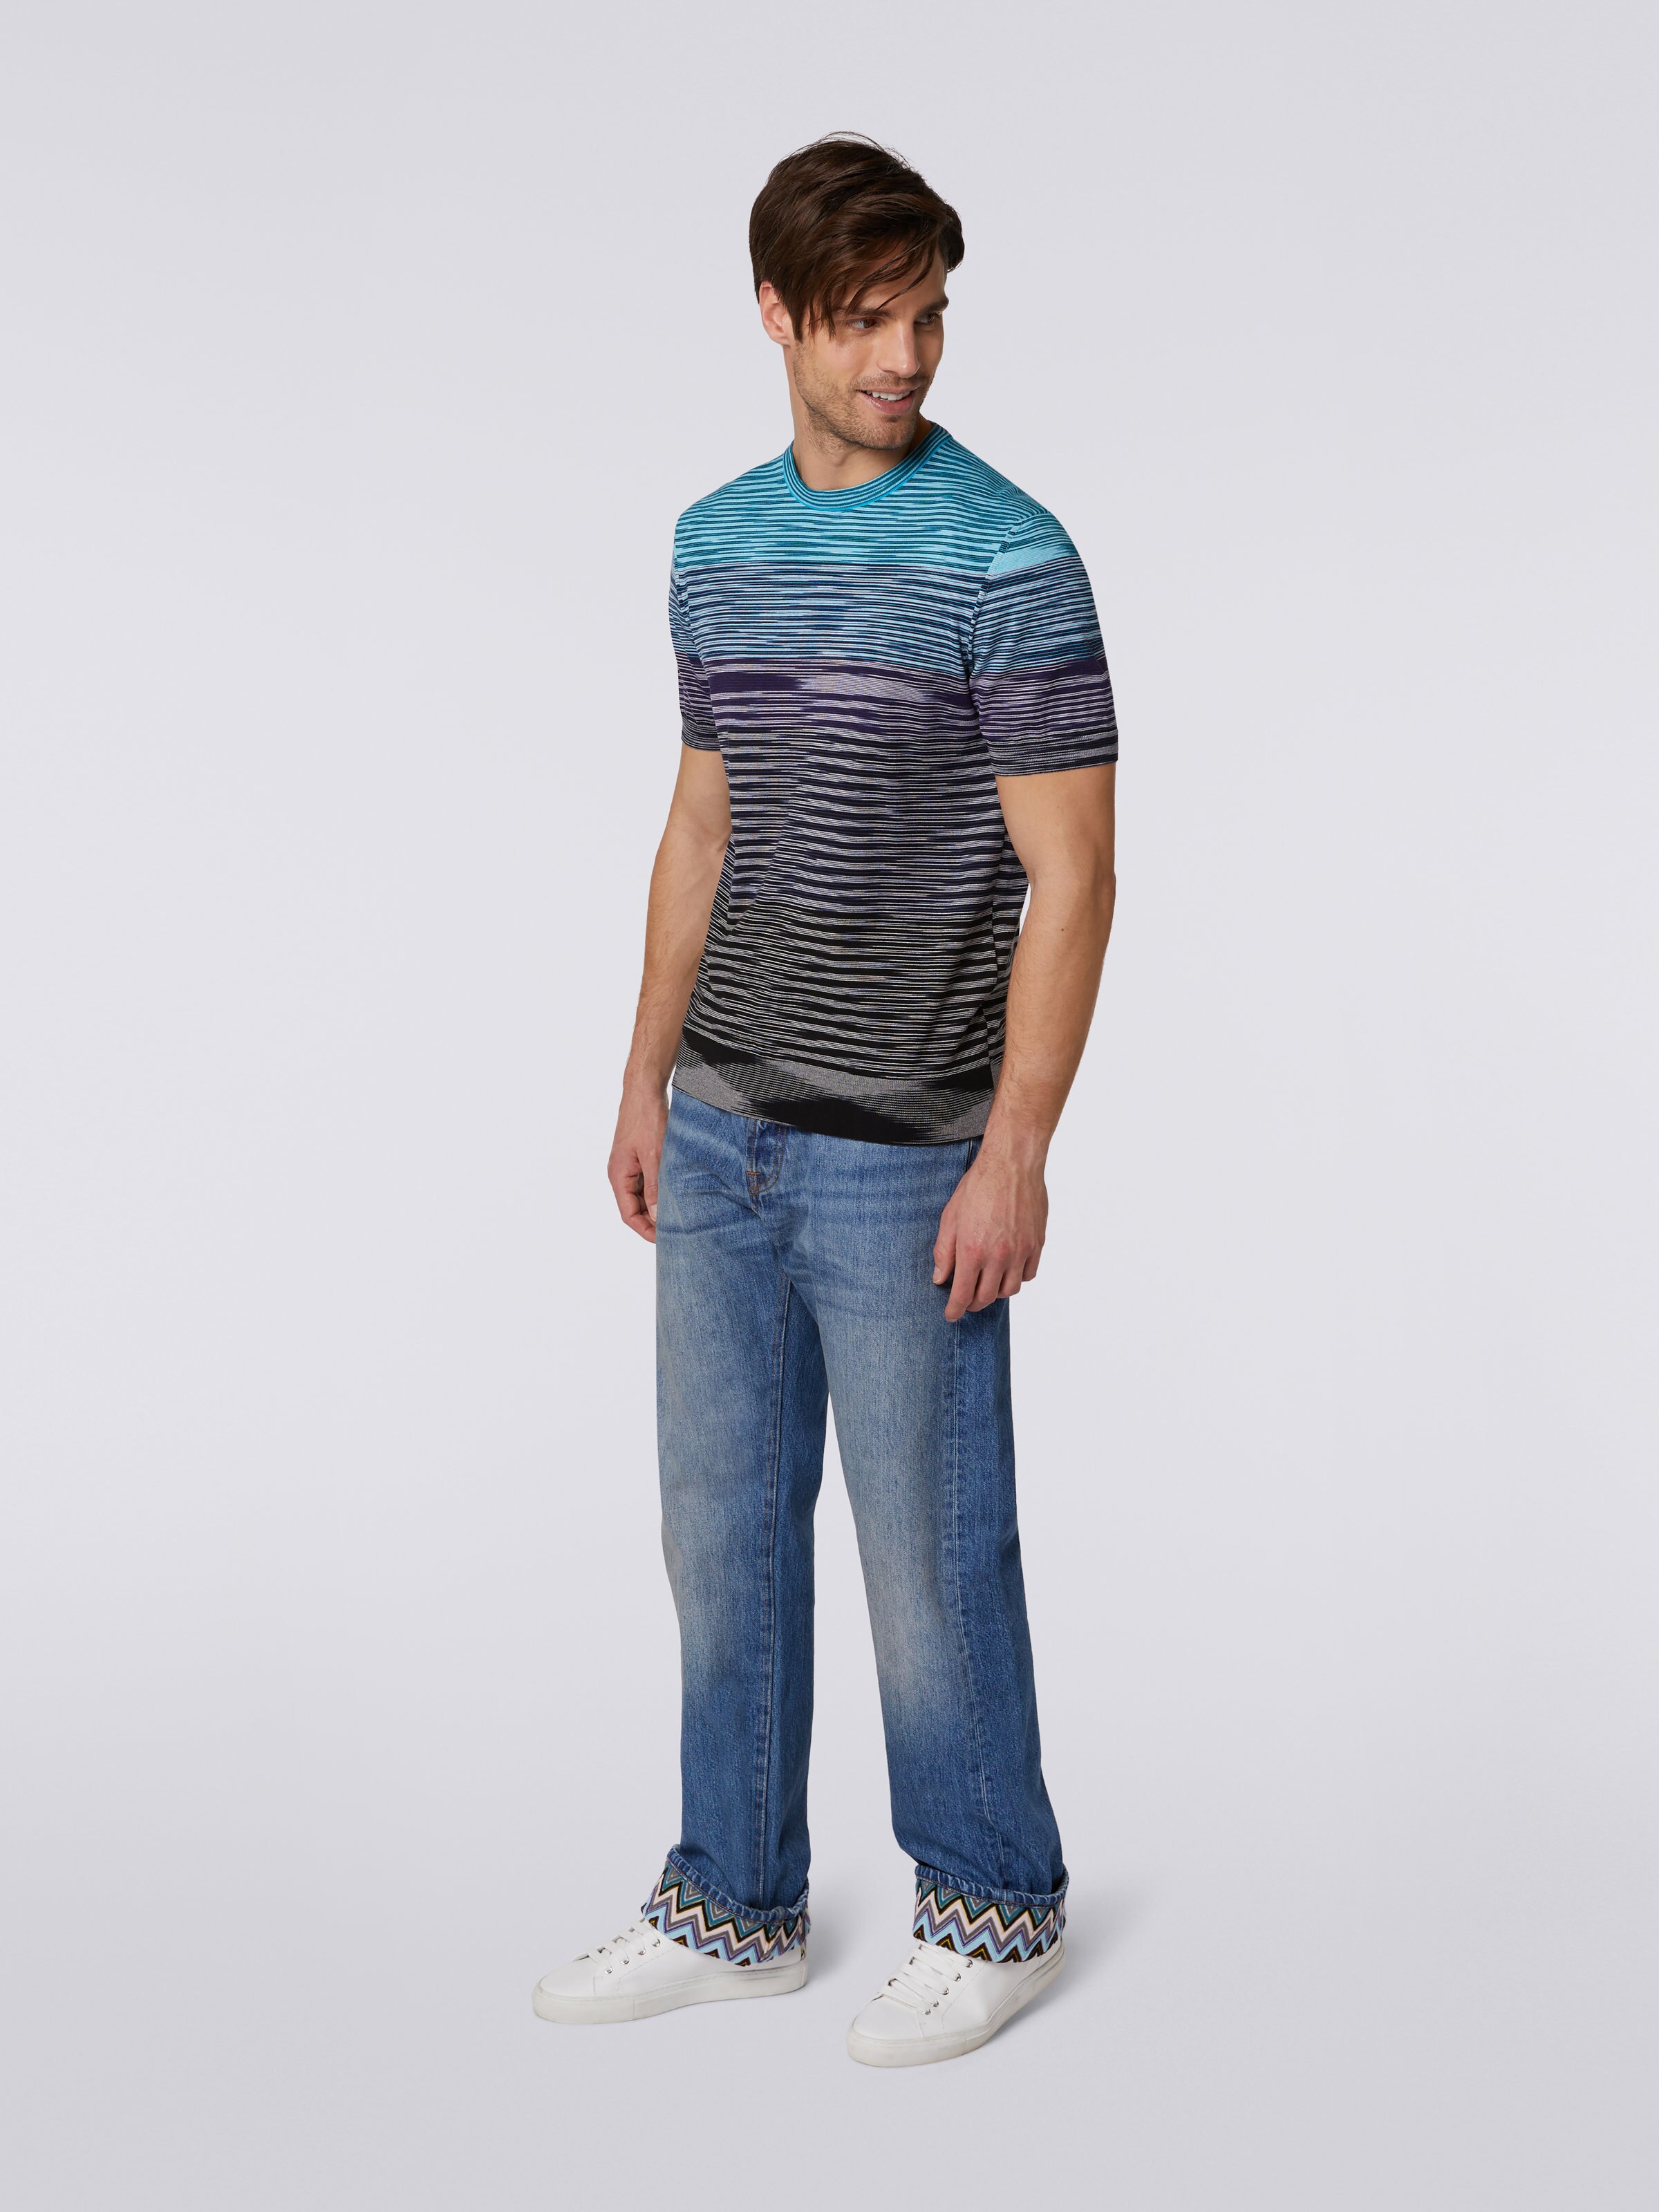 Camiseta de cuello redondo y manga corta en punto de algodón a rayas degradadas, Azul Oscuro, Morado & Negro - 2